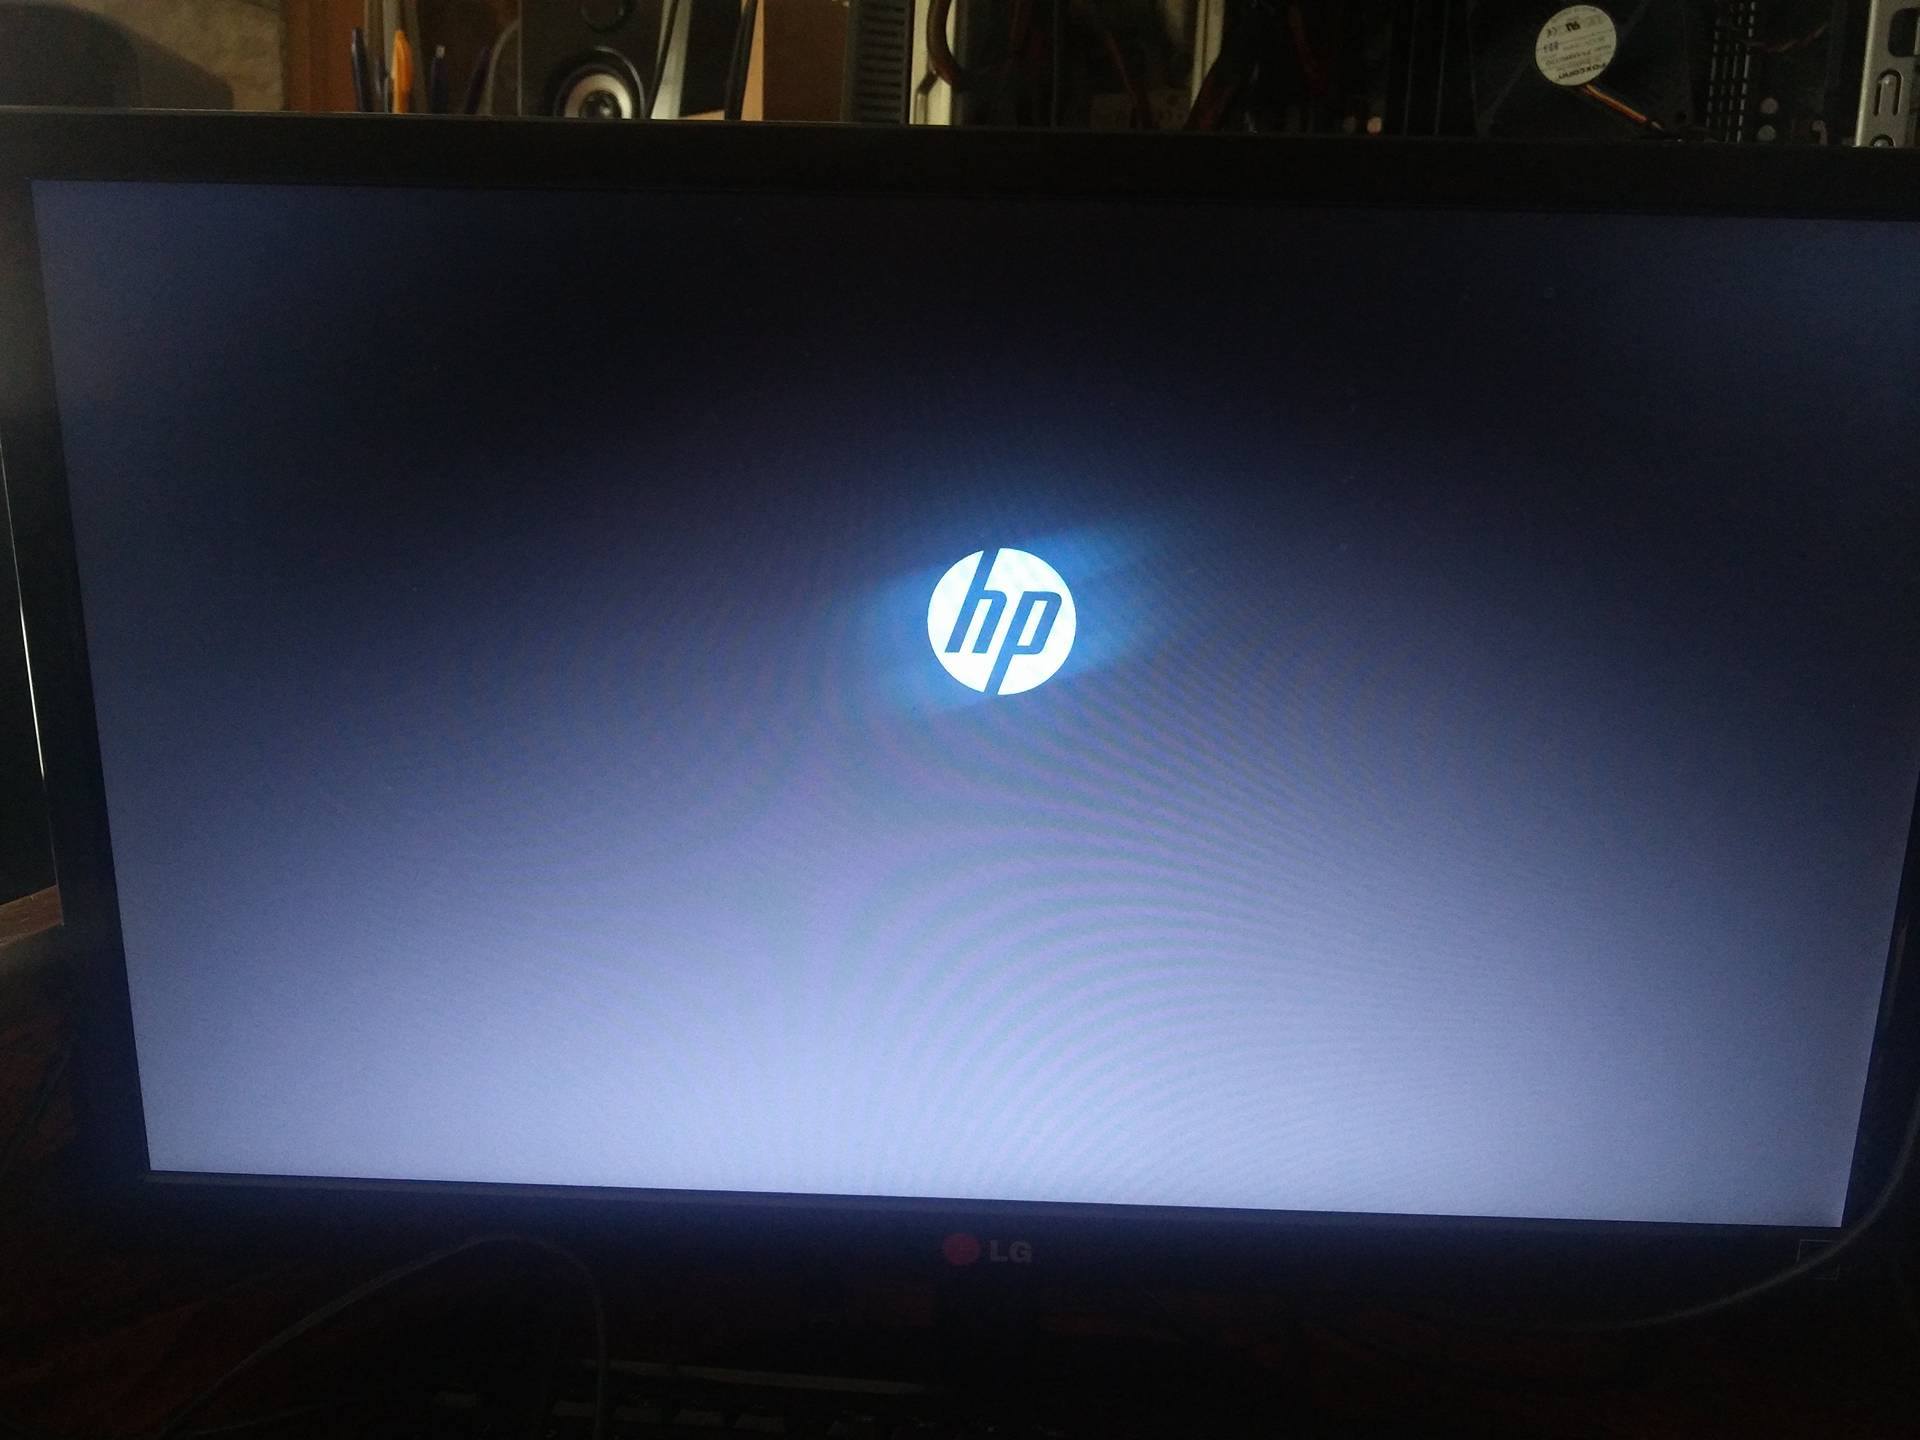 HP PC Logo - Installing windows 10 (EDU) using usb - HP Support Community - 6186607